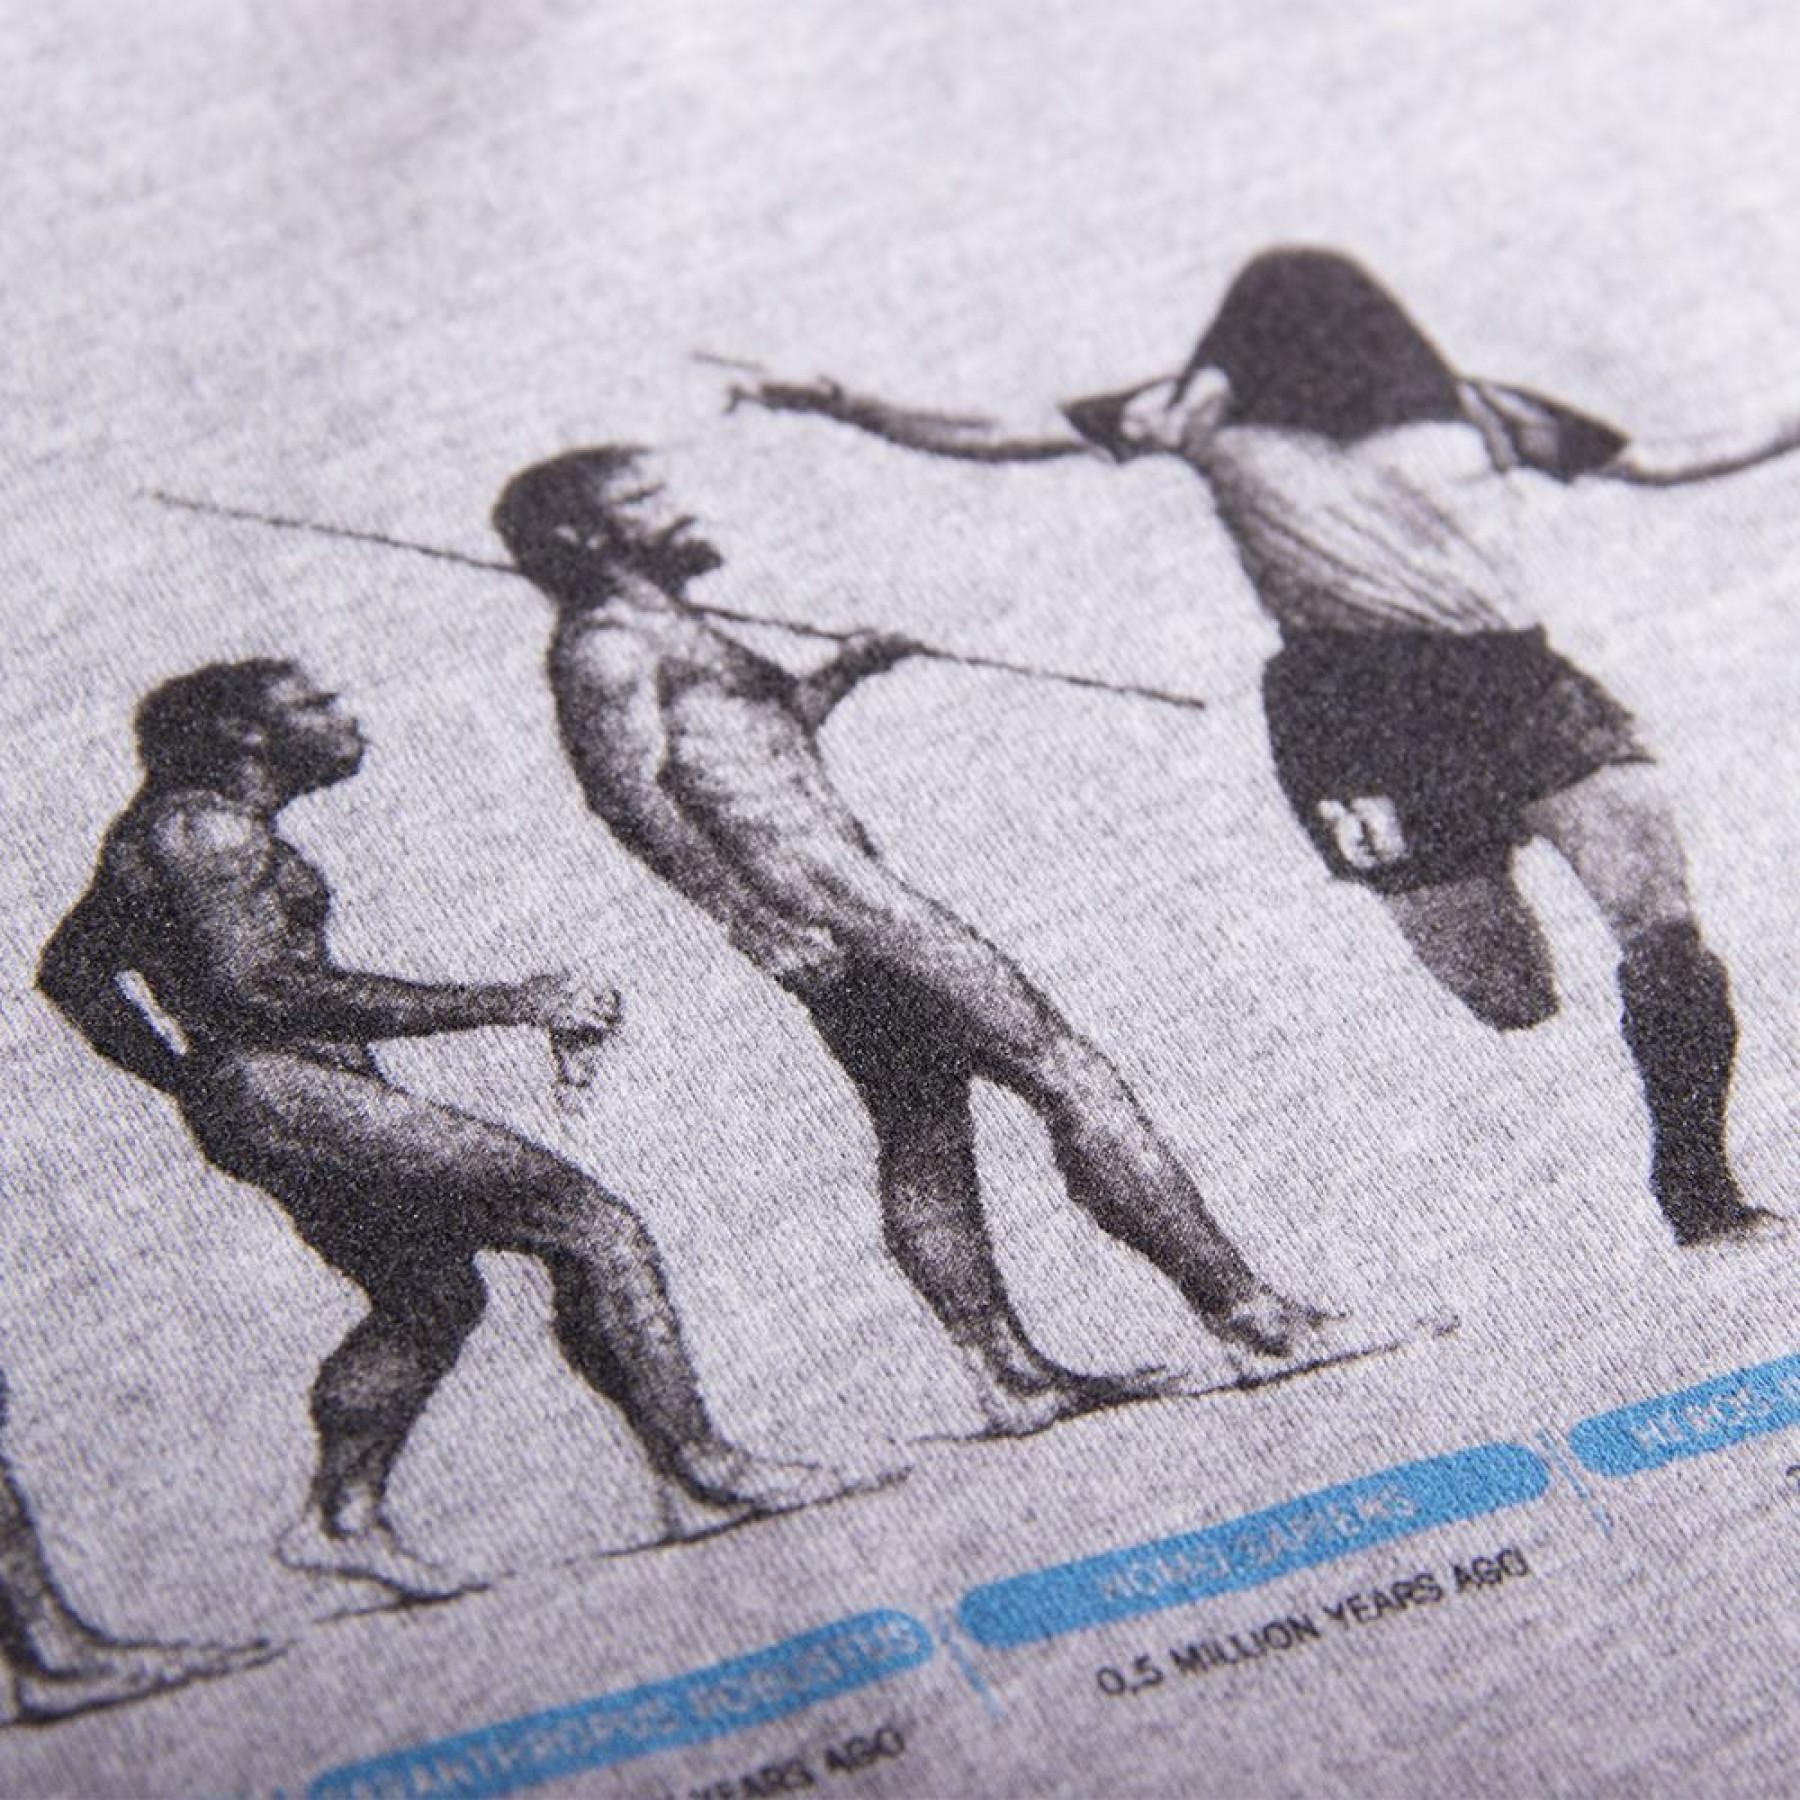 Camiseta Copa Football Human Evolution